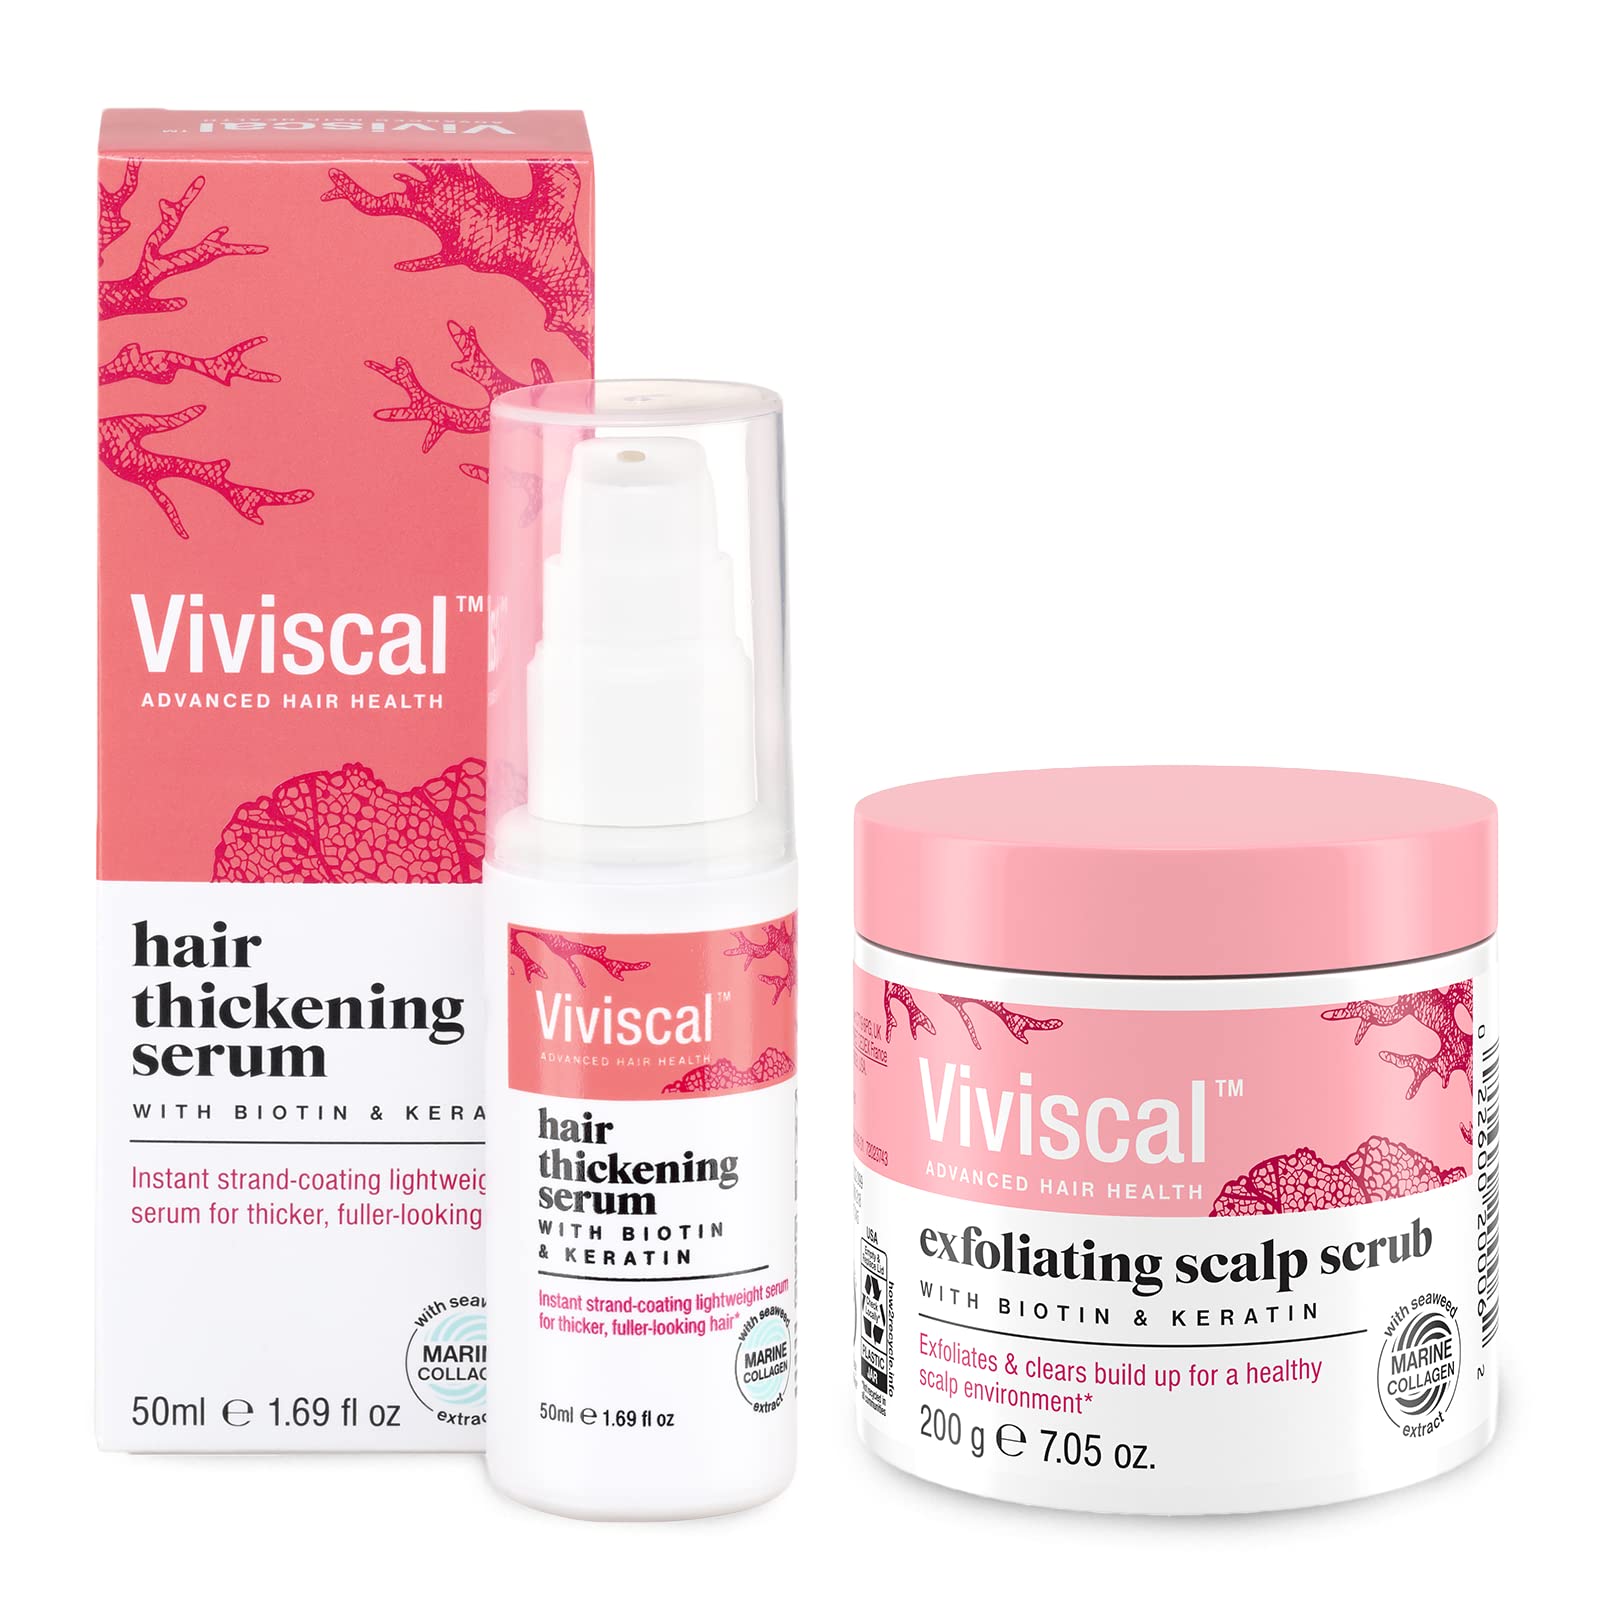 Bundle of Viviscal Hair Thickening Serum 50ml (1.69 fl. oz.) + Viviscal Exfoliating Scalp Scrub 200g (7.05 oz.)